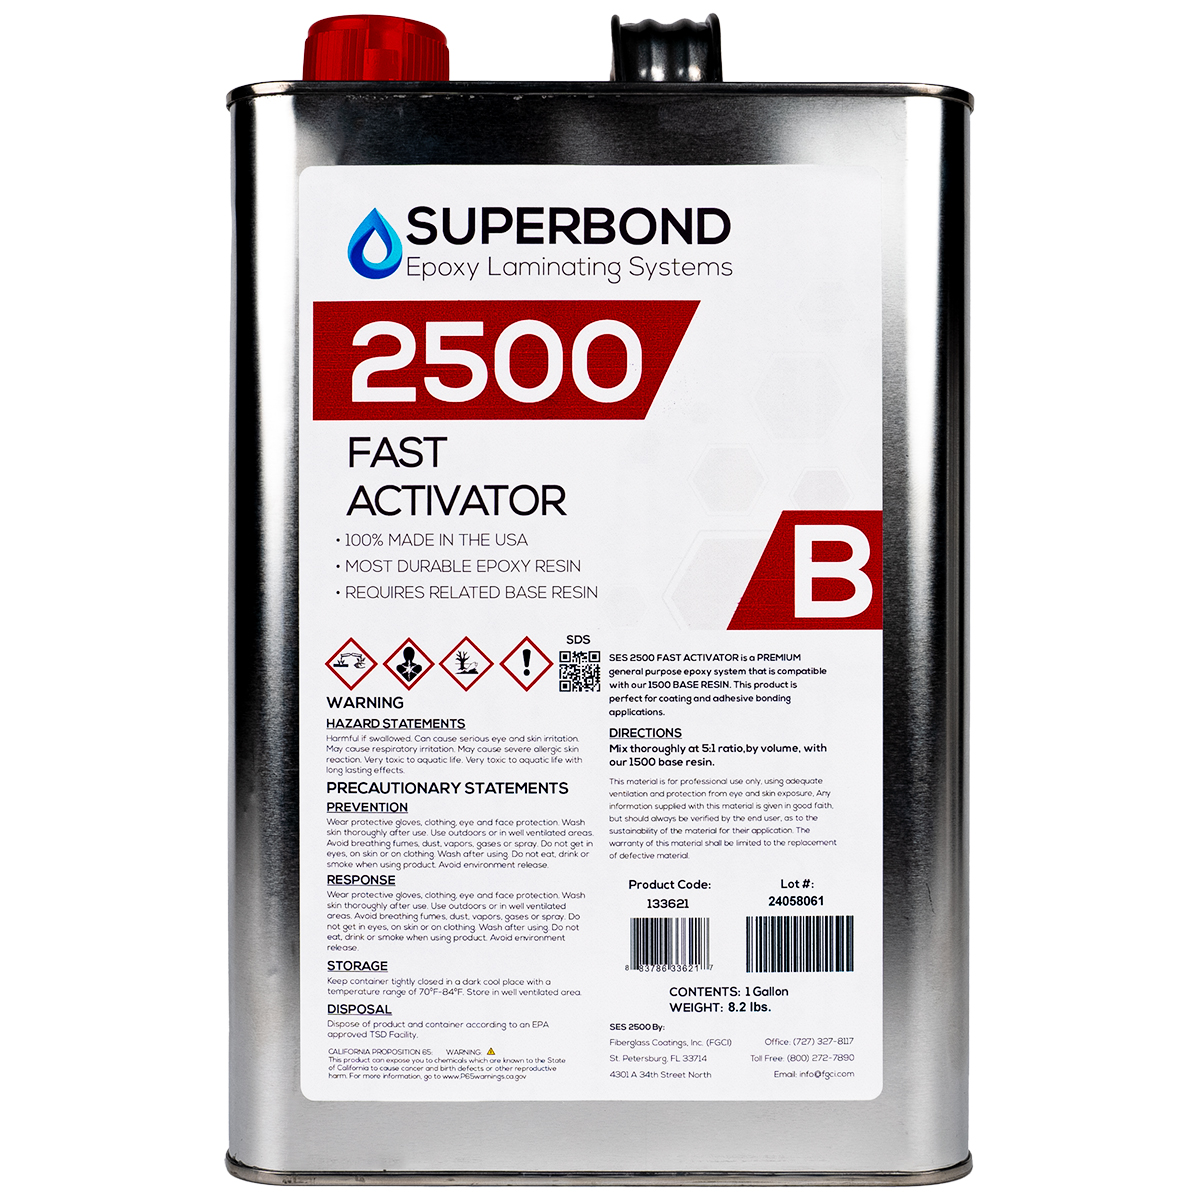 Superbond Epoxy Laminating System - 2500 Fast Activator